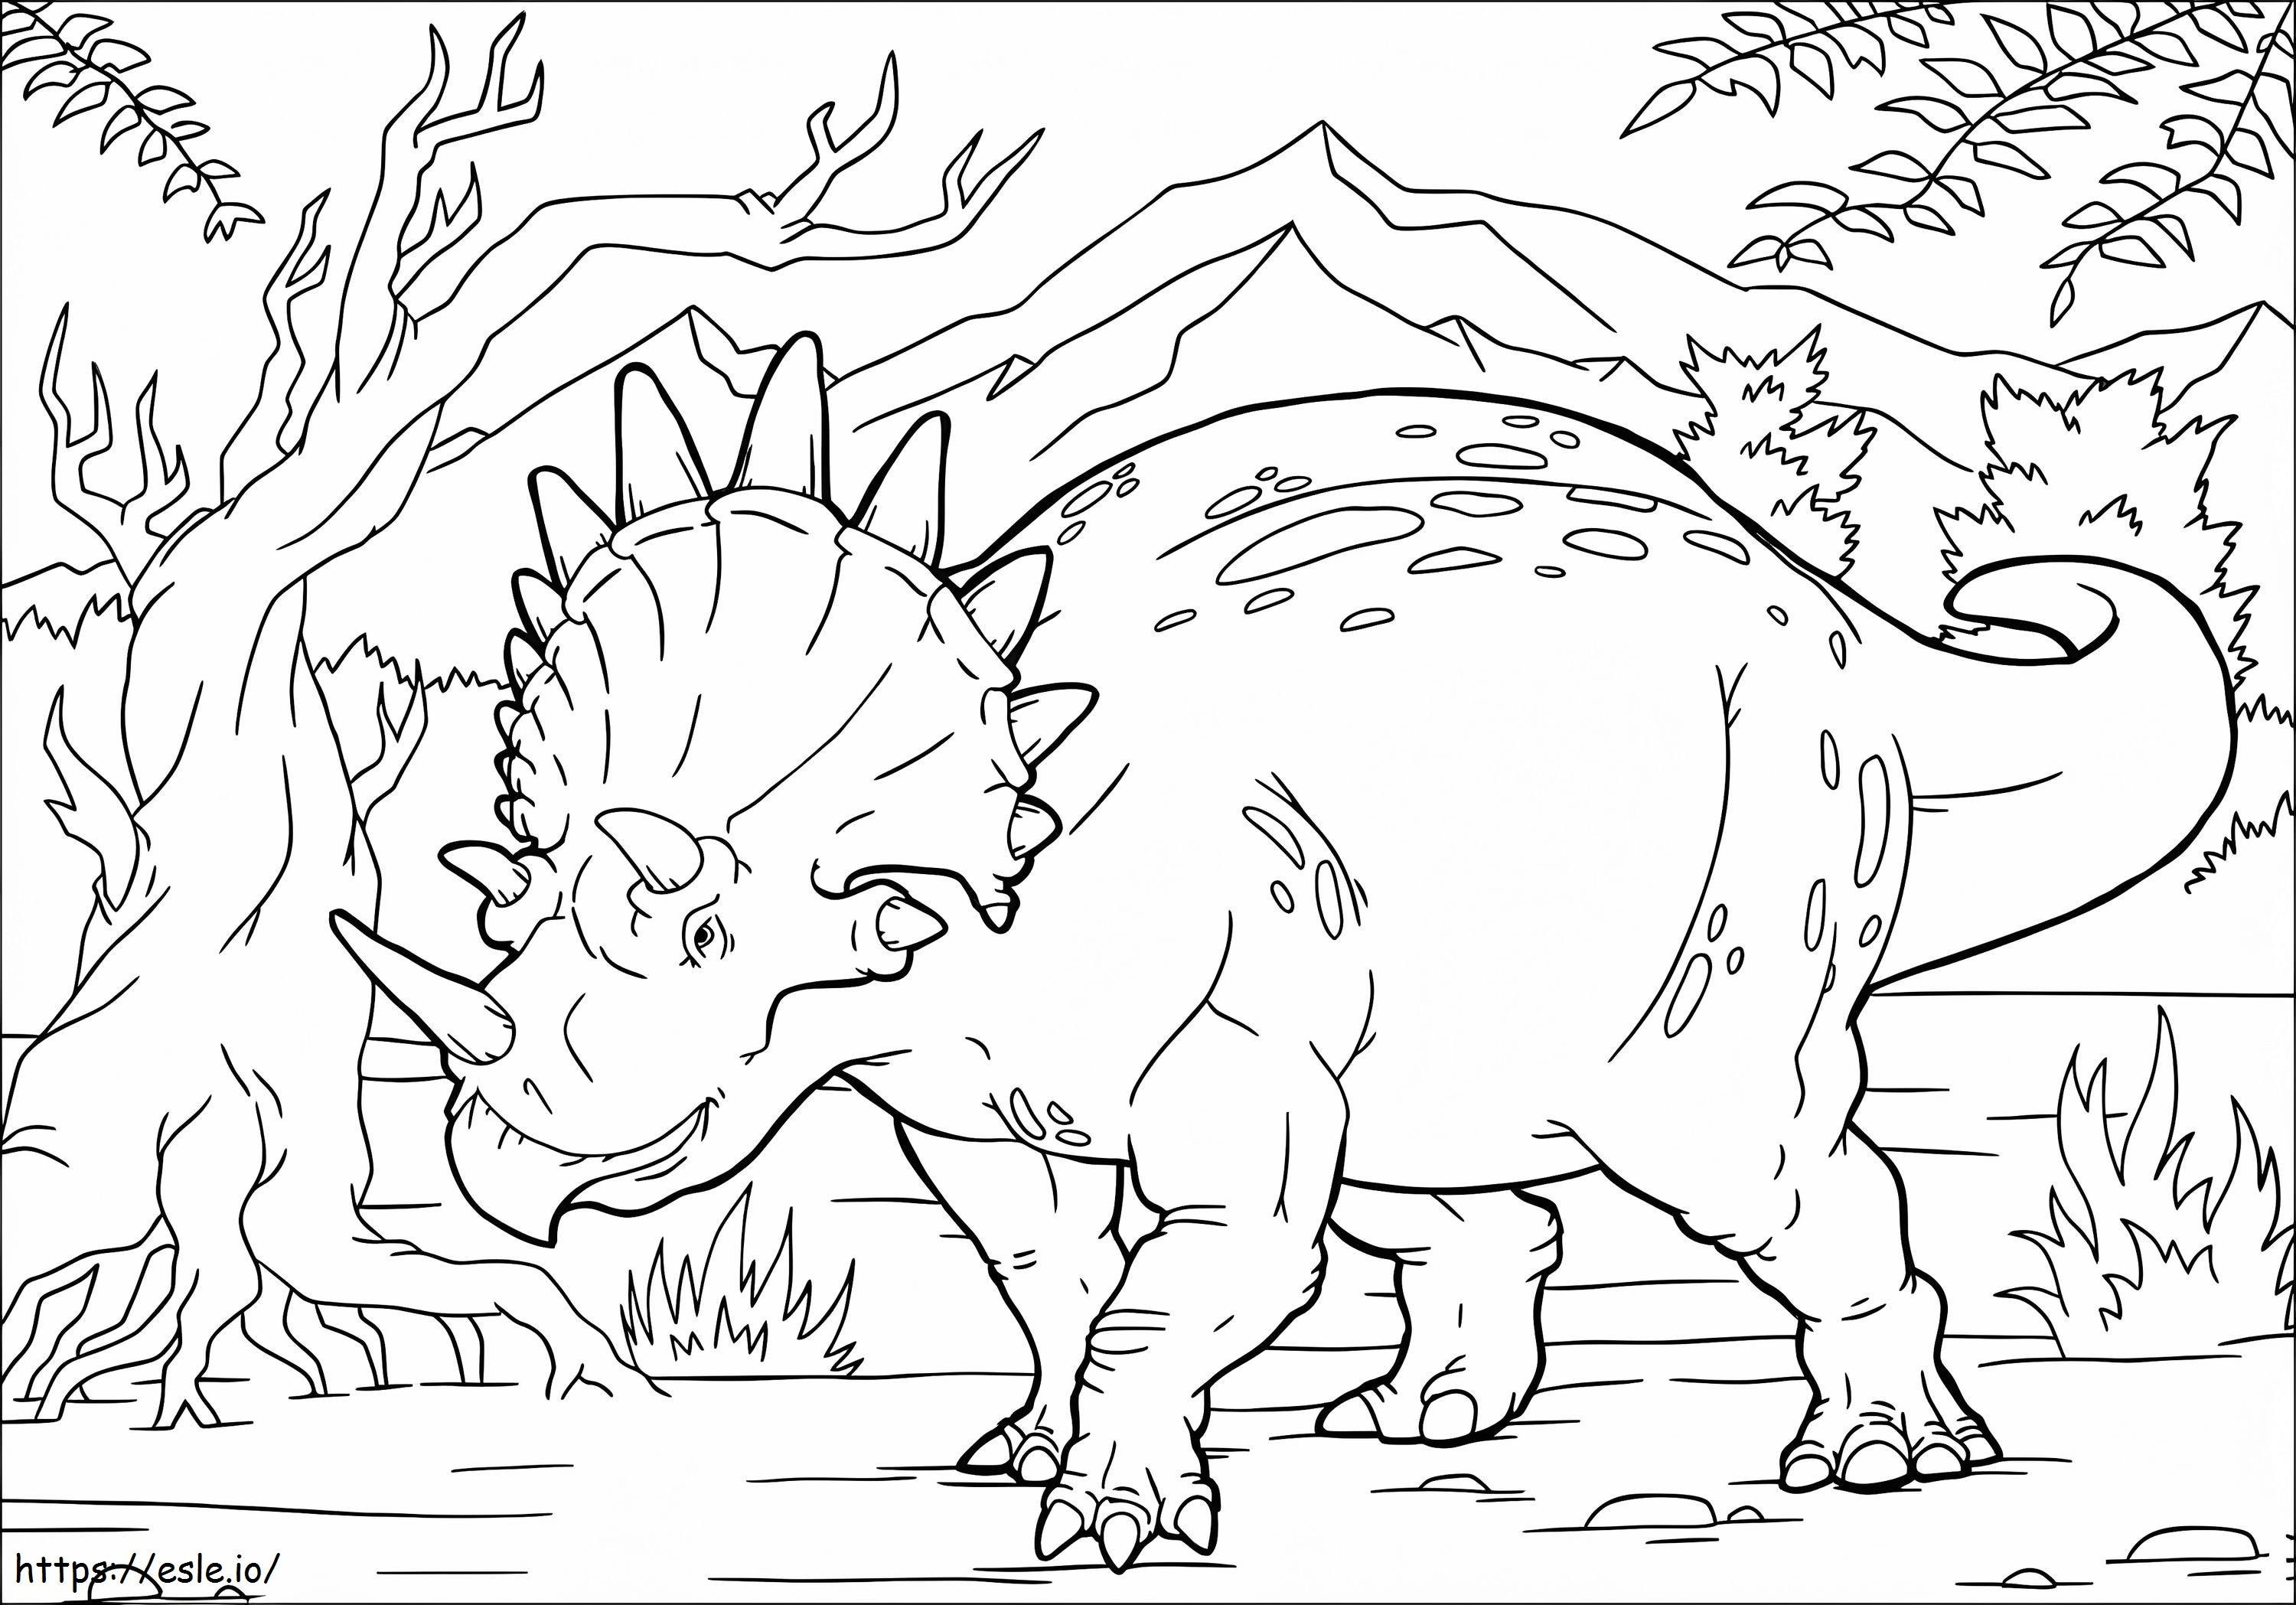 Ausmalbilder Triceratops ausmalbilder